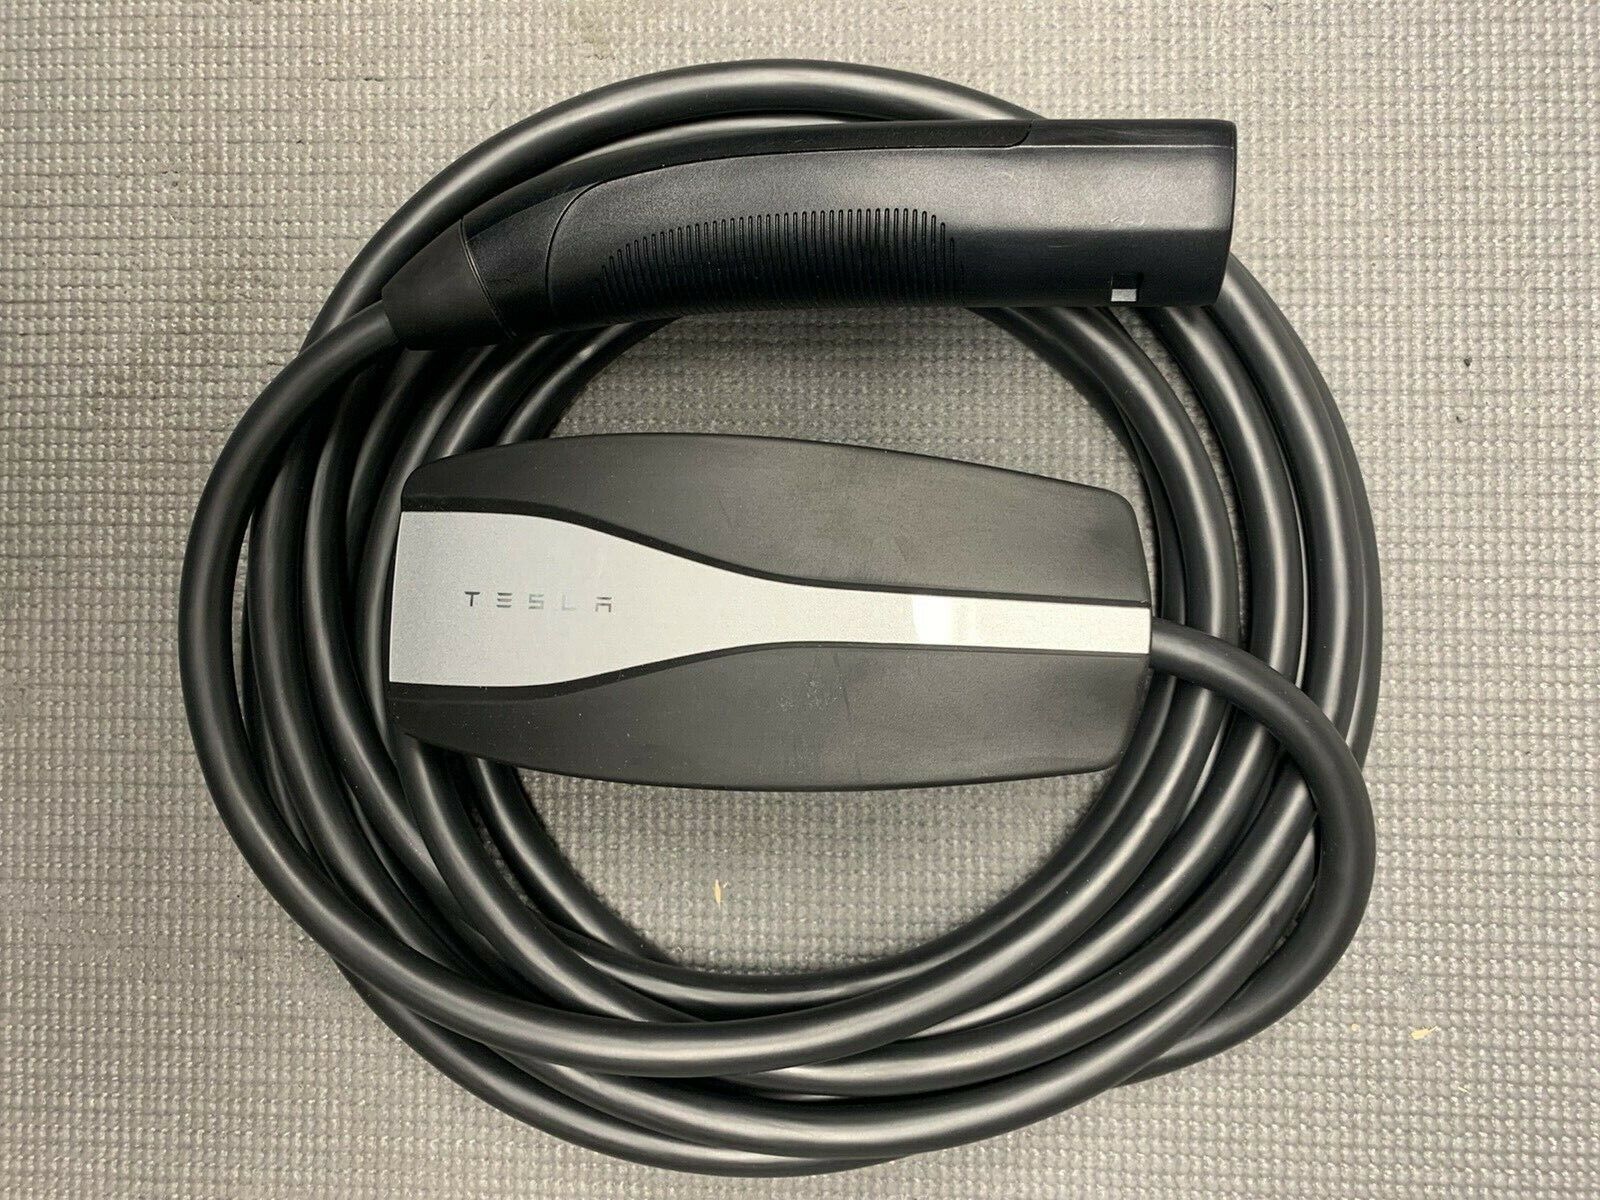 Tesla Gen 2 Universal Mobile Connector charger UMC cord only OEM PN 1101789-00-J